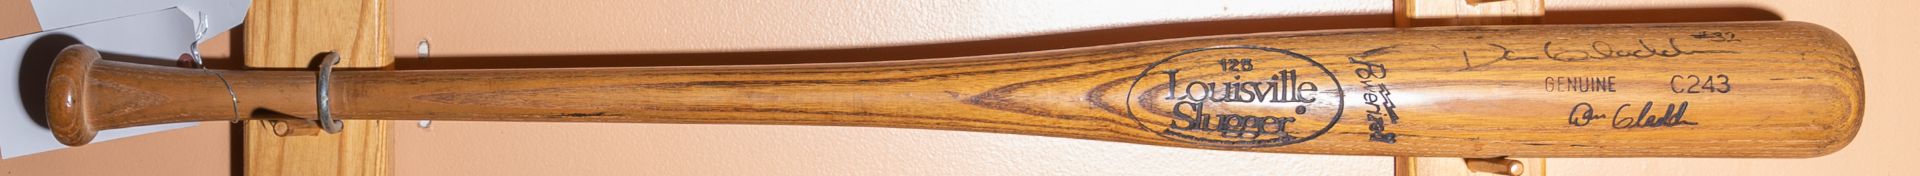 Autographed Louisville Slugger Wood Baseball Bat Stamped and Signed "Dan Gladden #32"